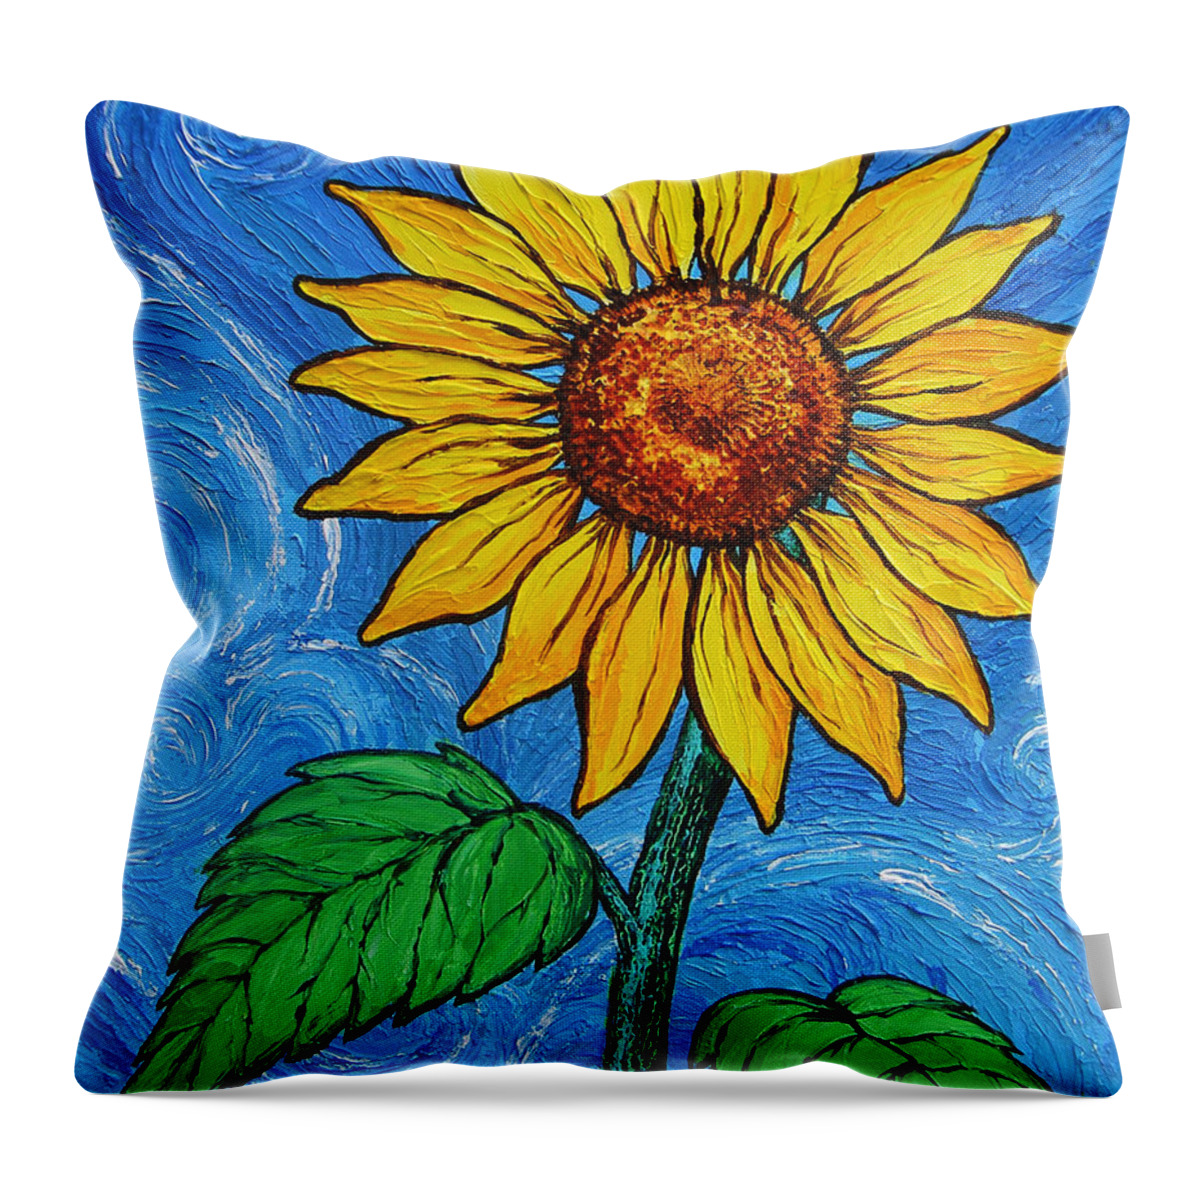 Sunflowers Throw Pillow featuring the painting A Sunflower by Juan Alcantara